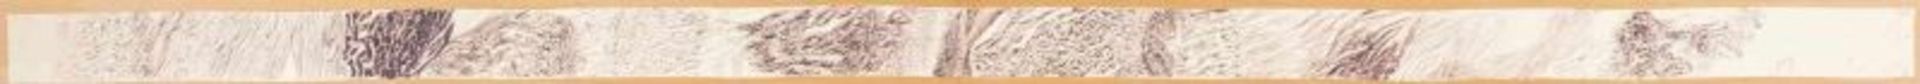 Nikias Skapinakis (n. 1931)"Mapa Mundo IV"Felt pen on toilet paperSigned and dated 88Note: Two